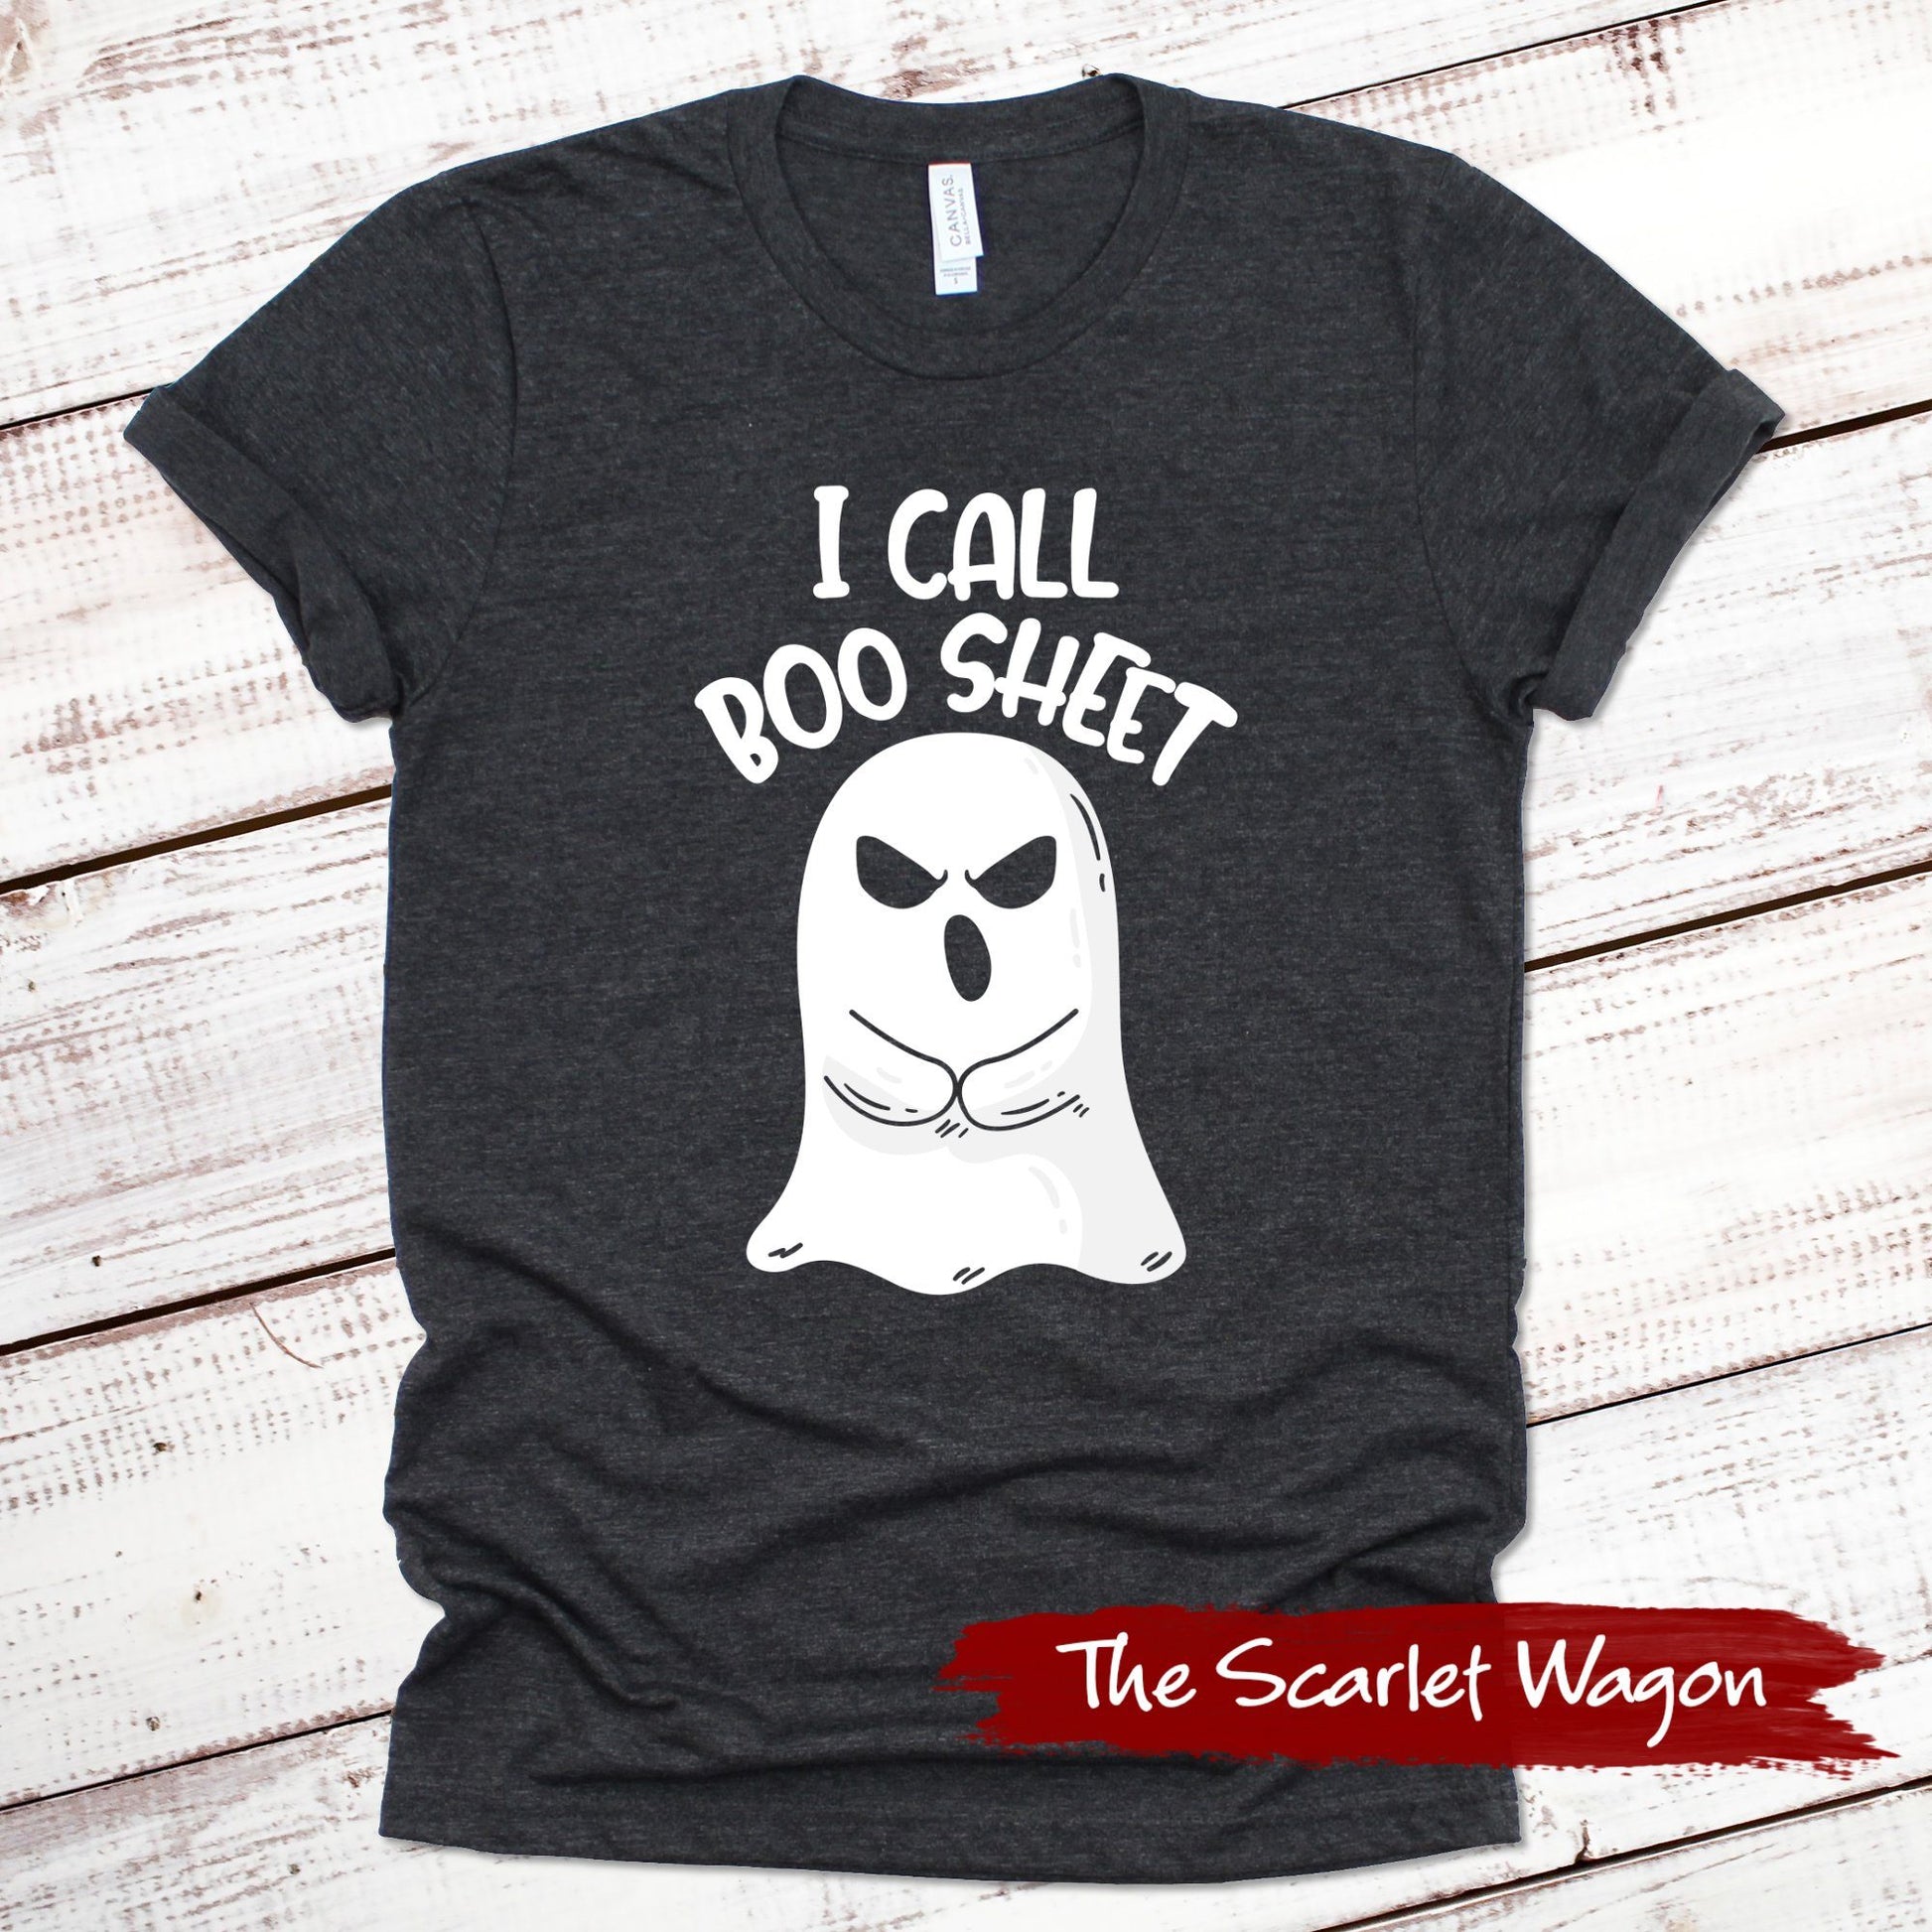 I Call Boo Sheet Halloween Shirt Scarlet Wagon Dark Gray Heather XS 